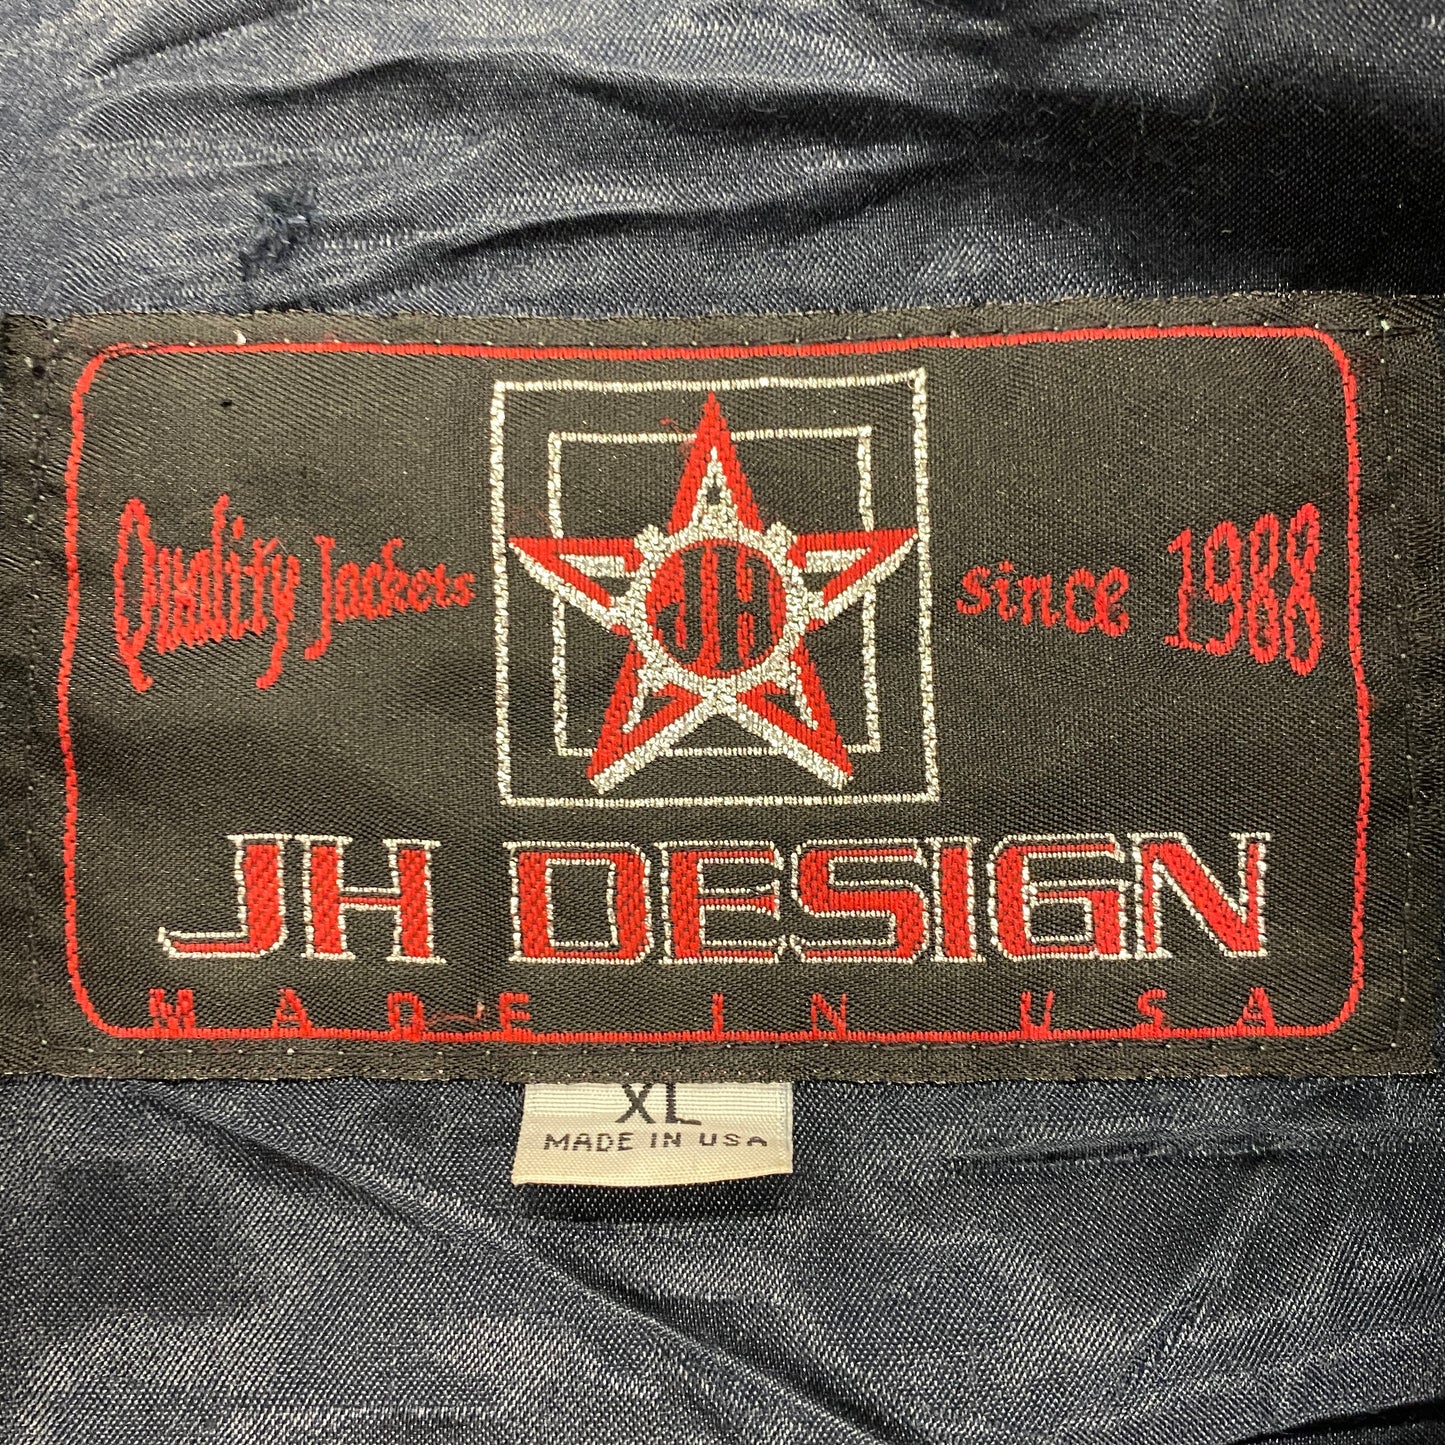 JH Designs Mark Martin Leather NASCAR Jacket - Size XL